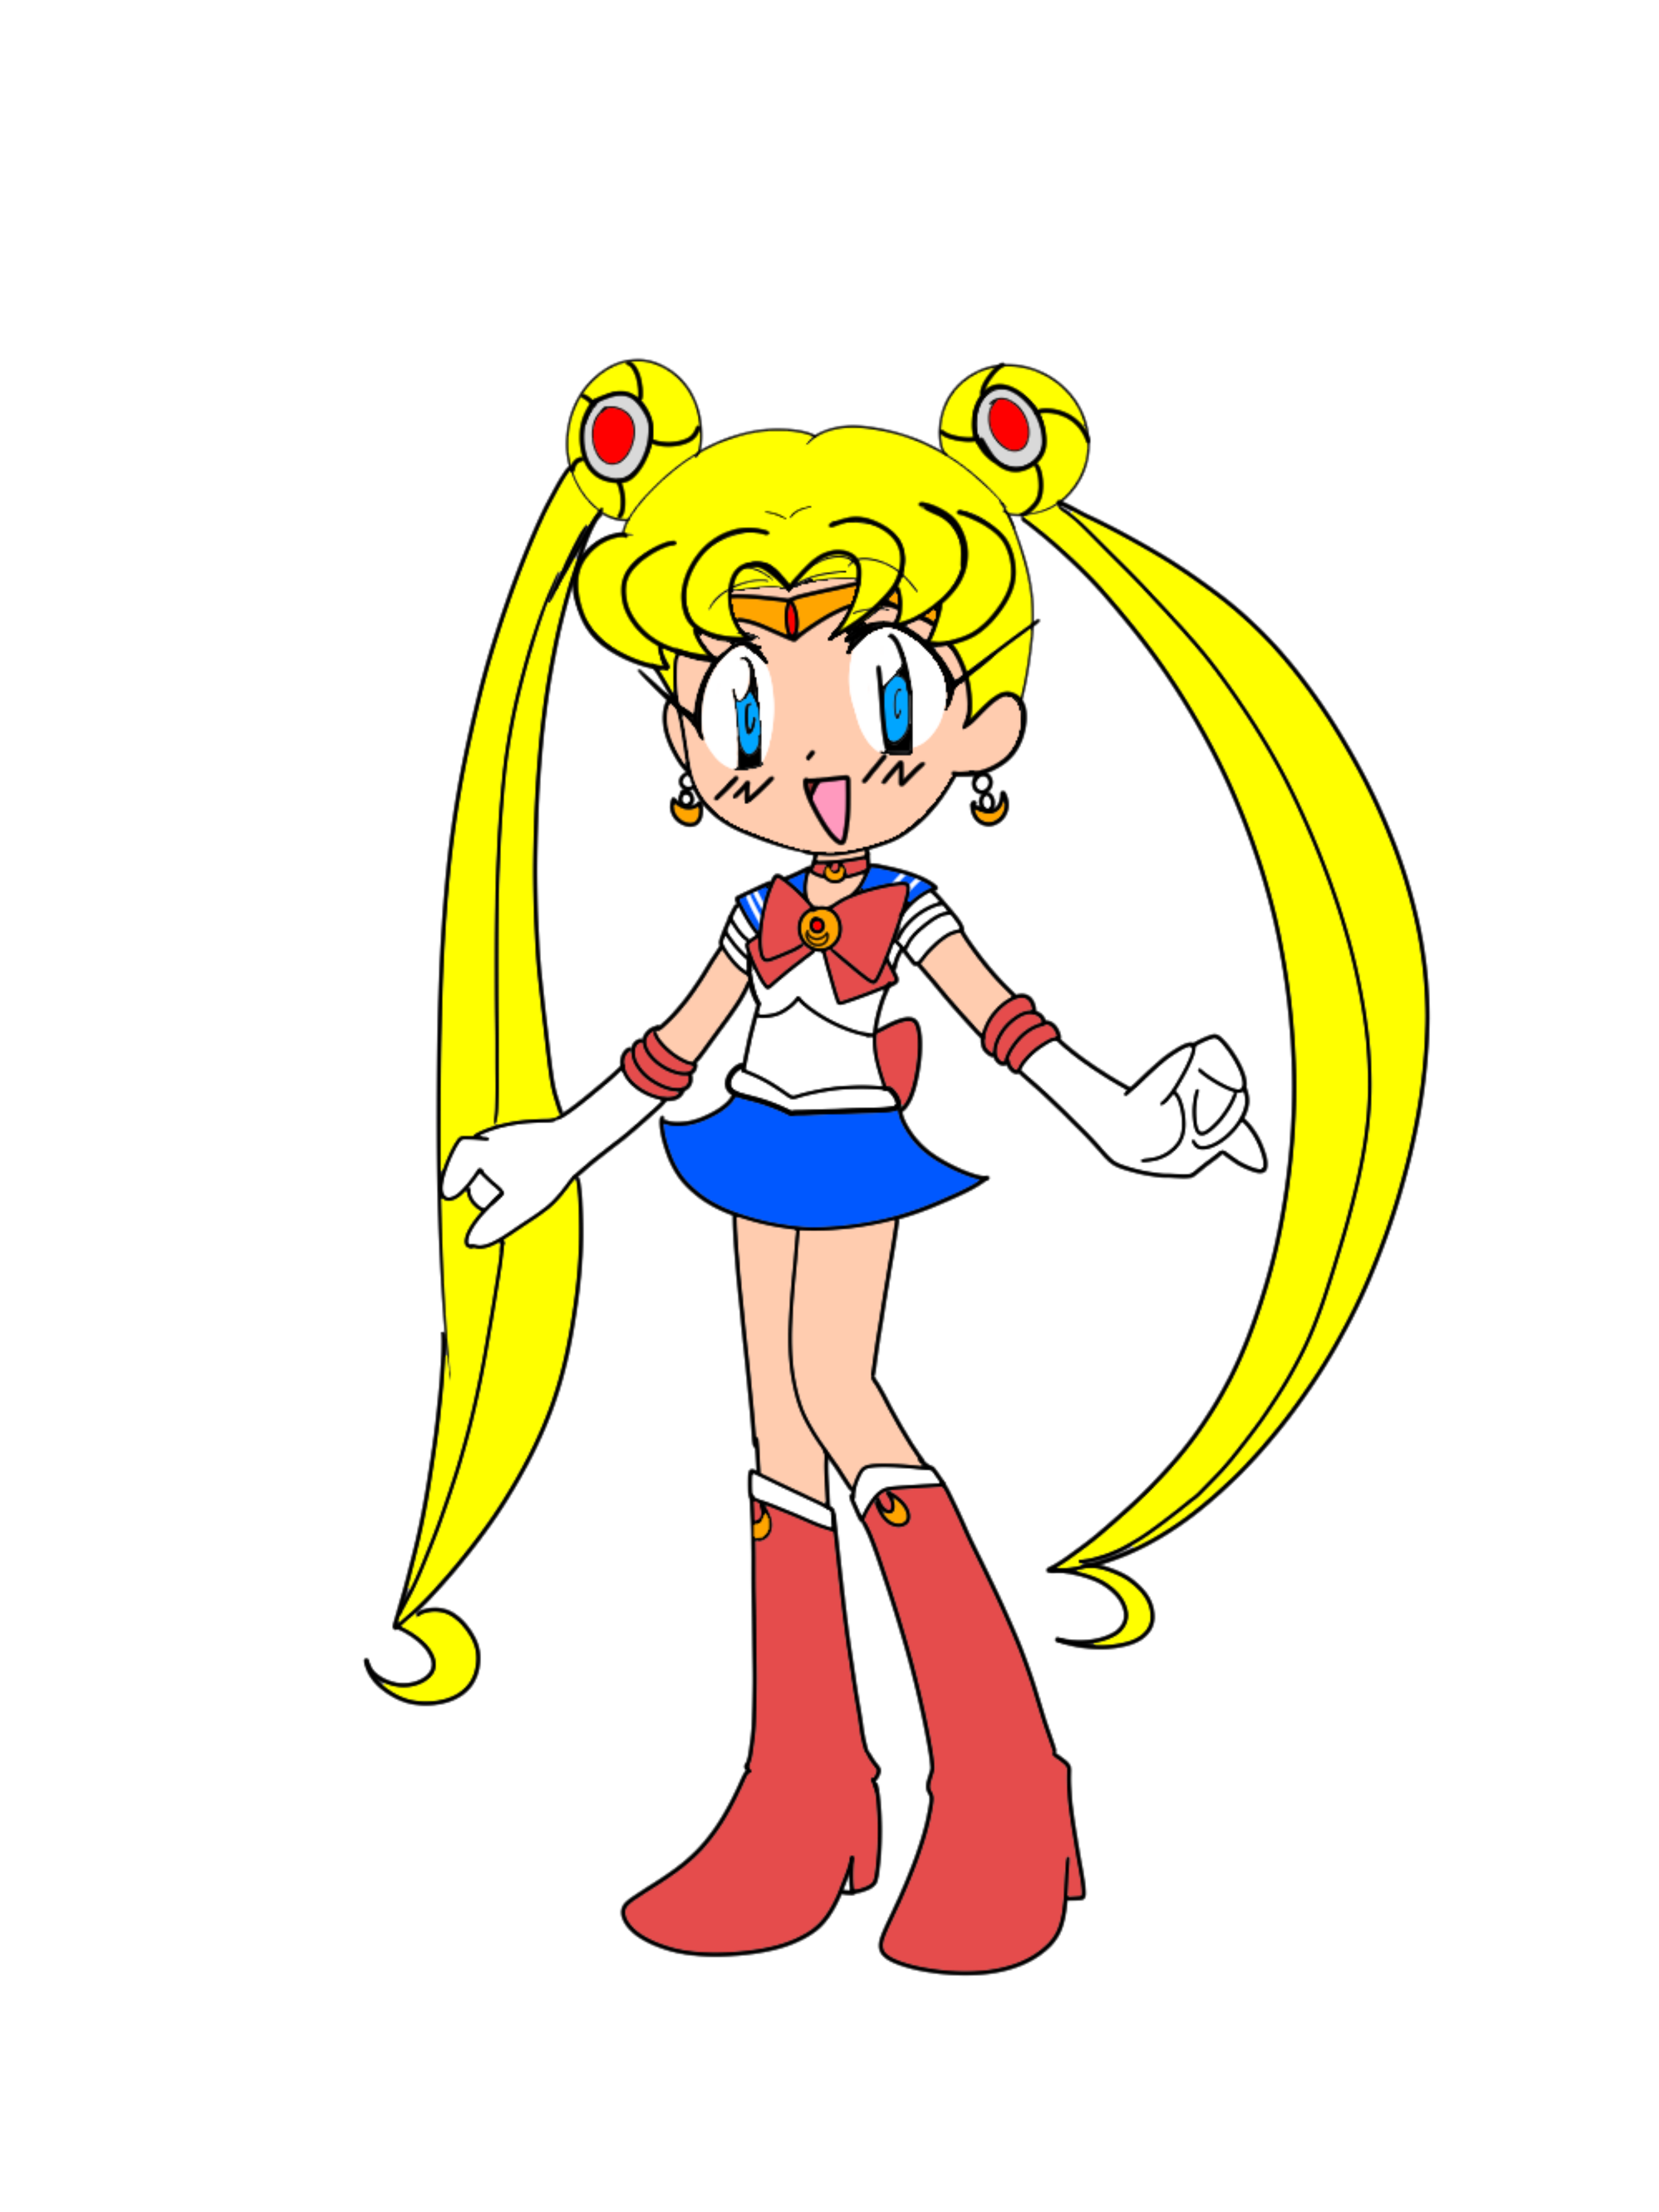 Sailor Moon 90's NauToon2007 style by RollYagami02 on DeviantArt